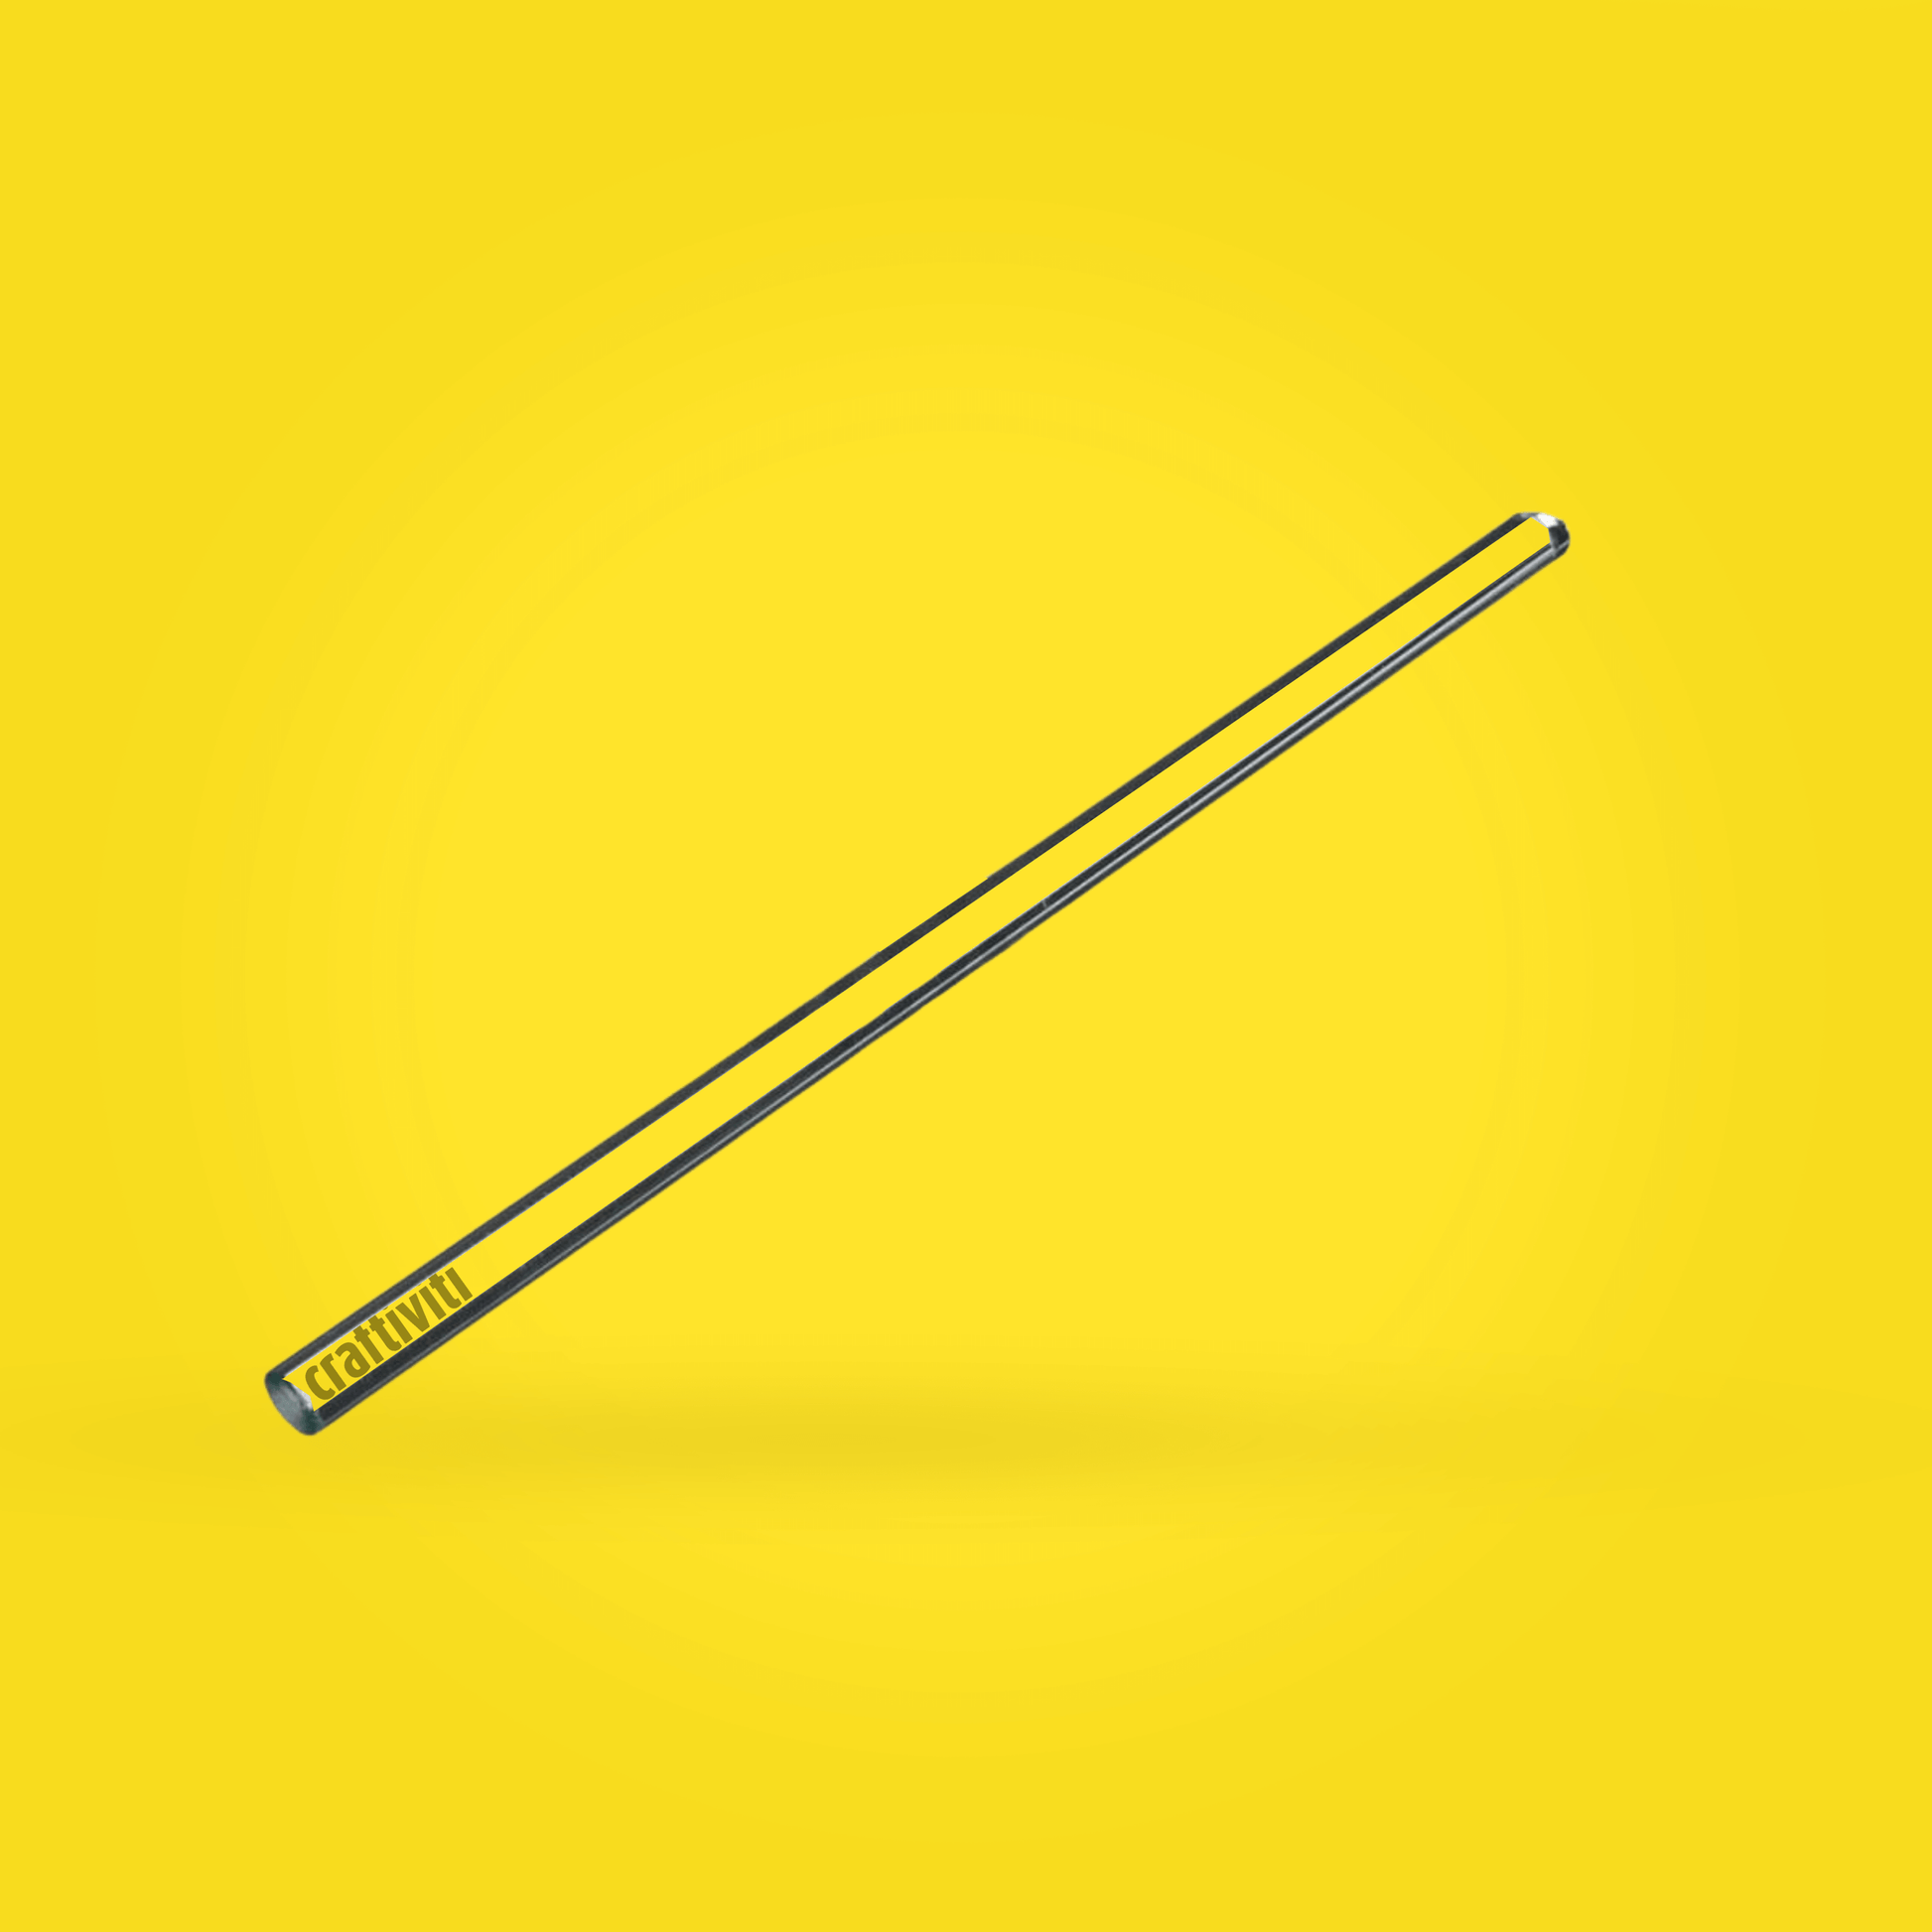 Glass Stirrer - Stirring Rod